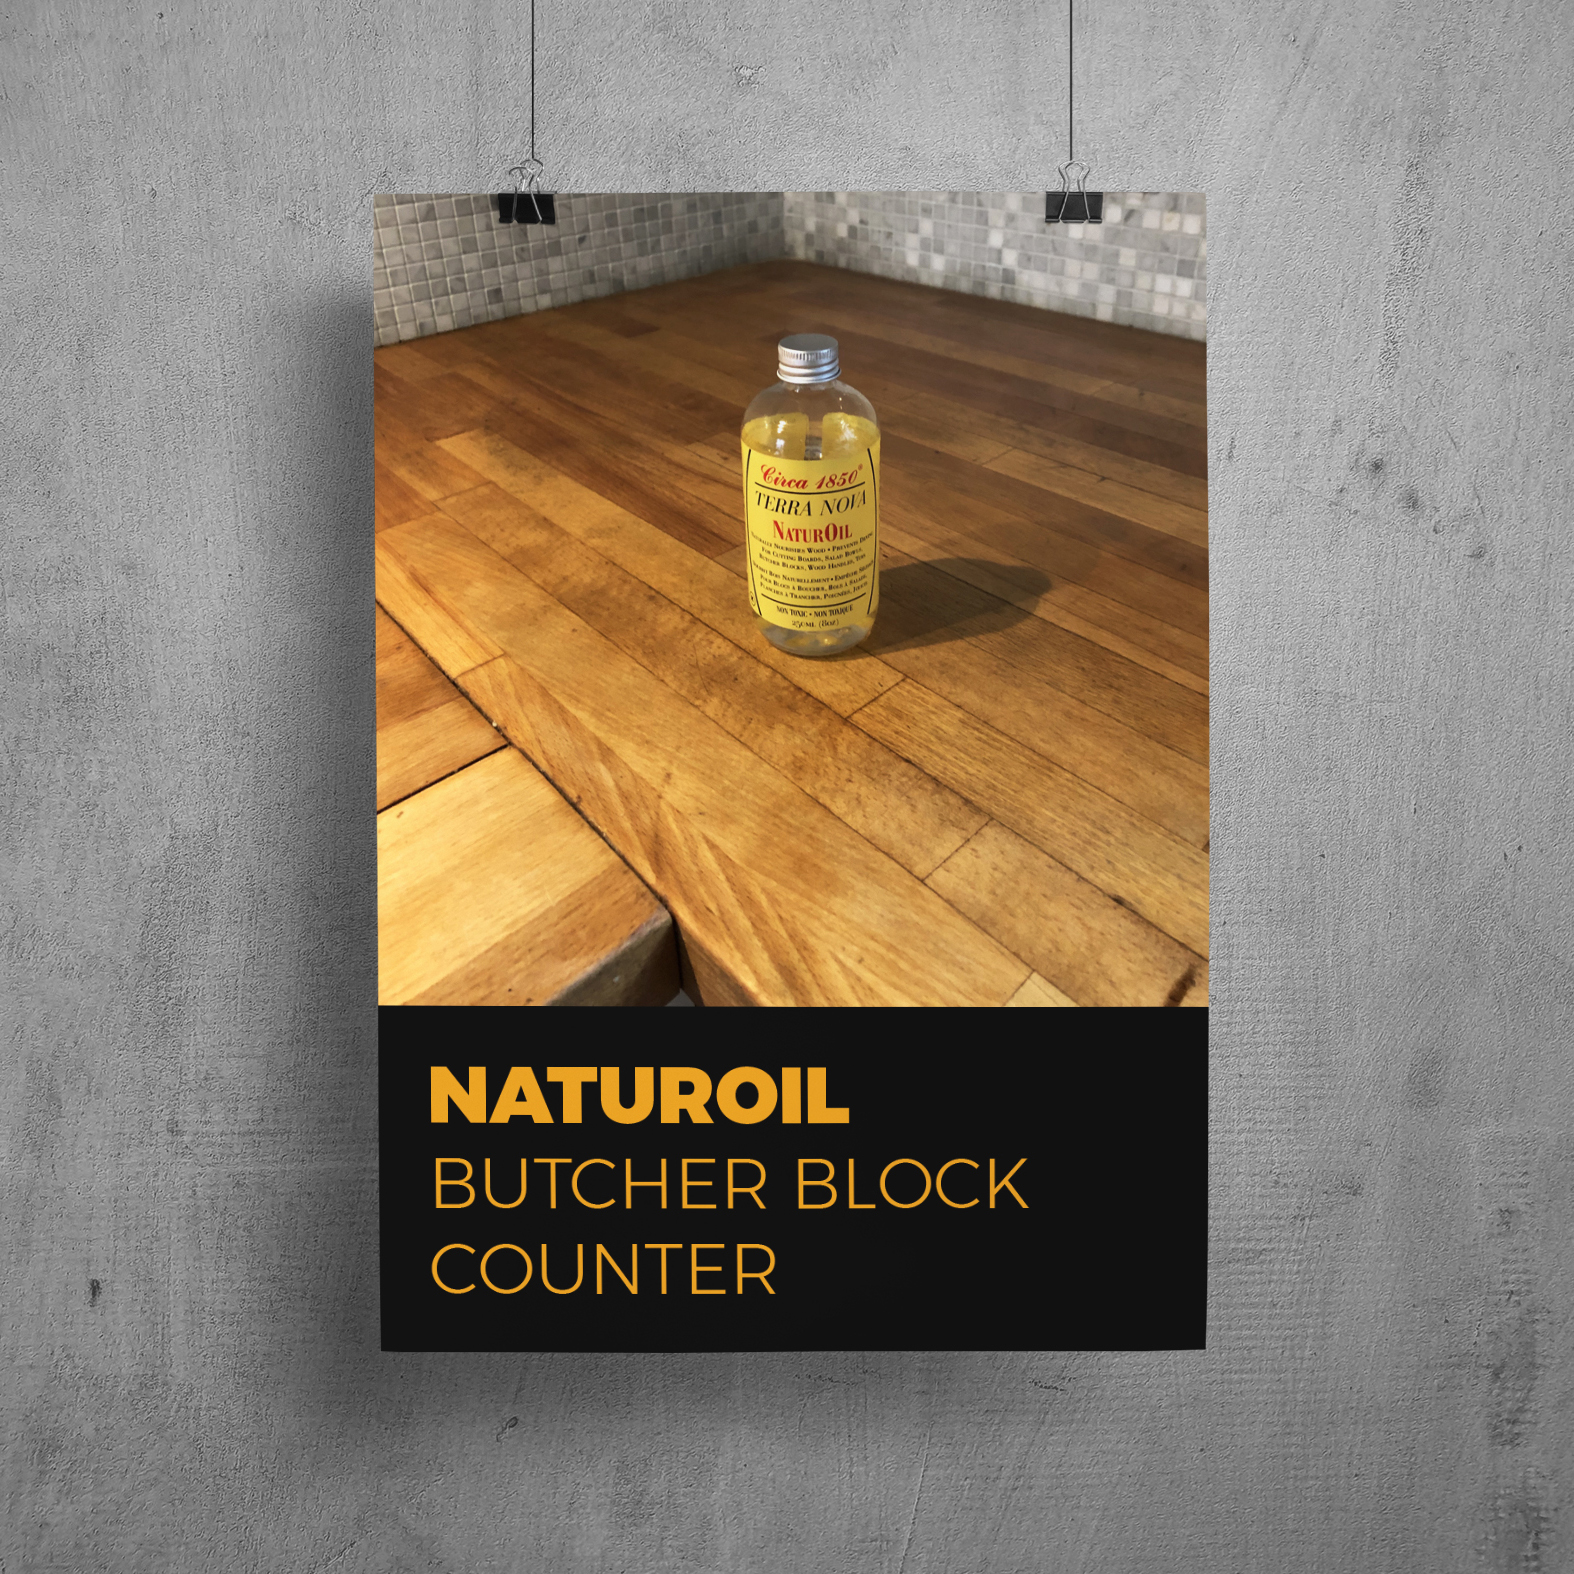 NaturOil Butcher Block Counters